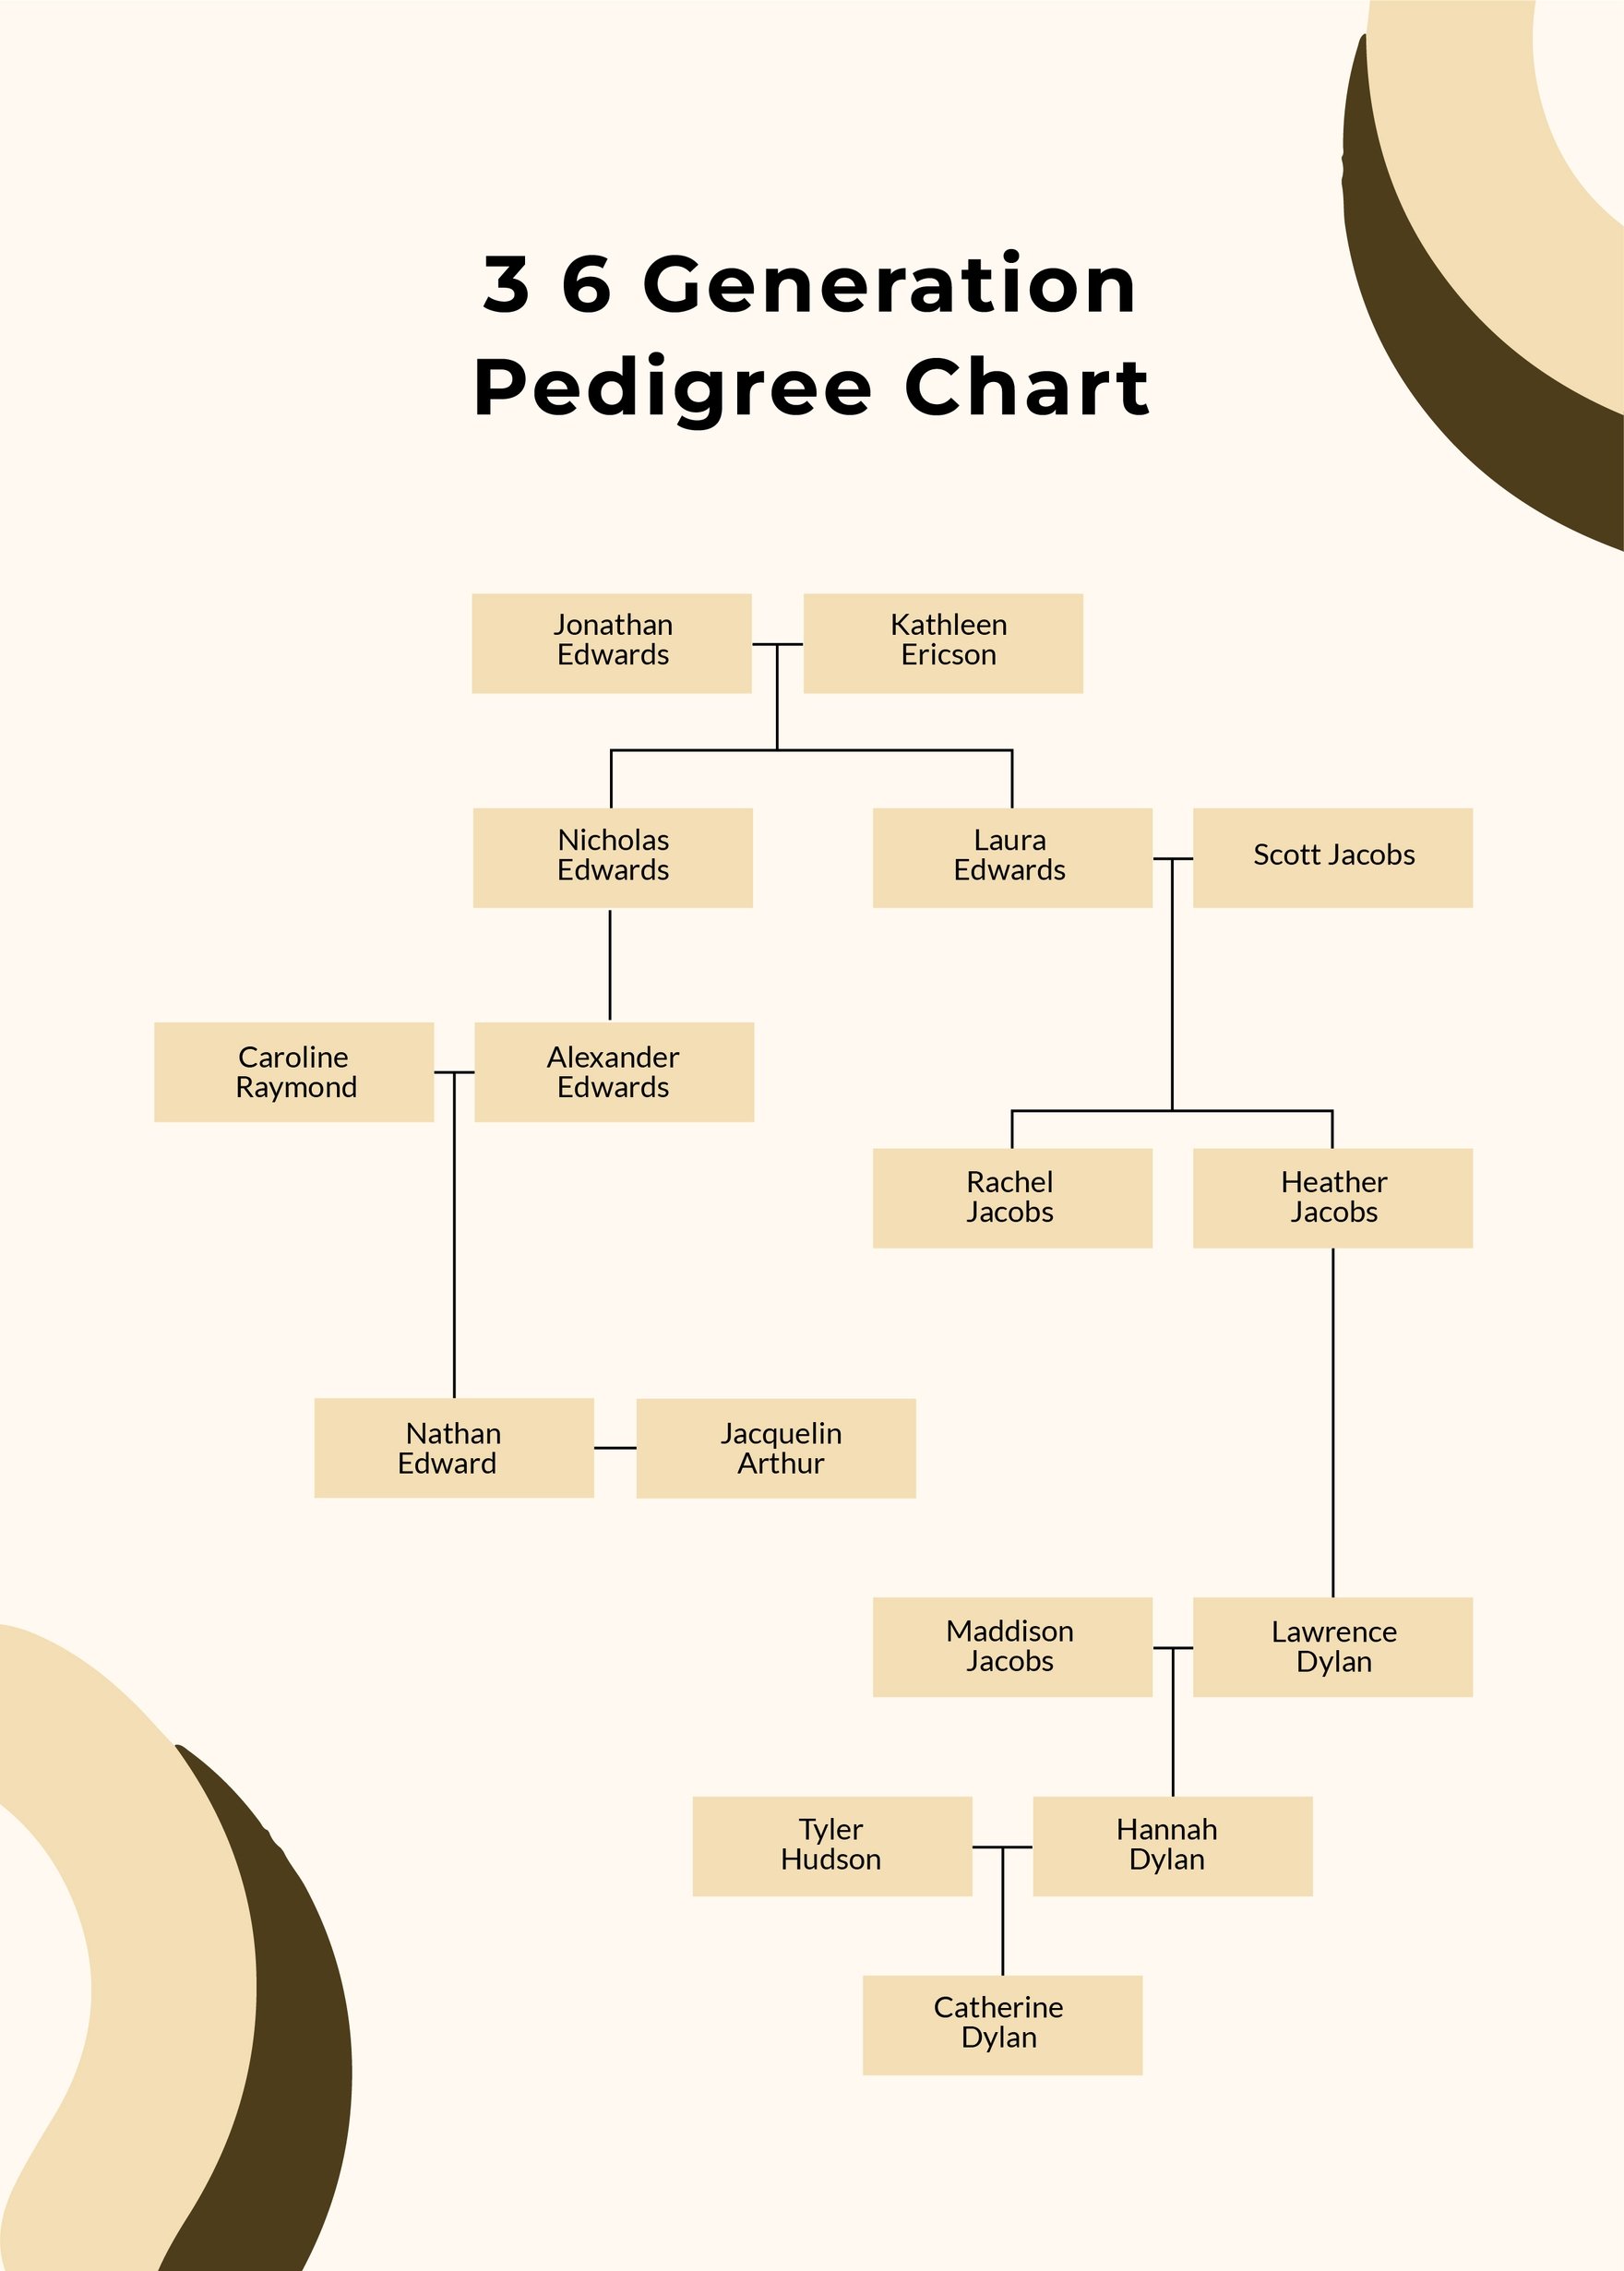 3 6 Generation Pedigree Chart in PDF, Illustrator